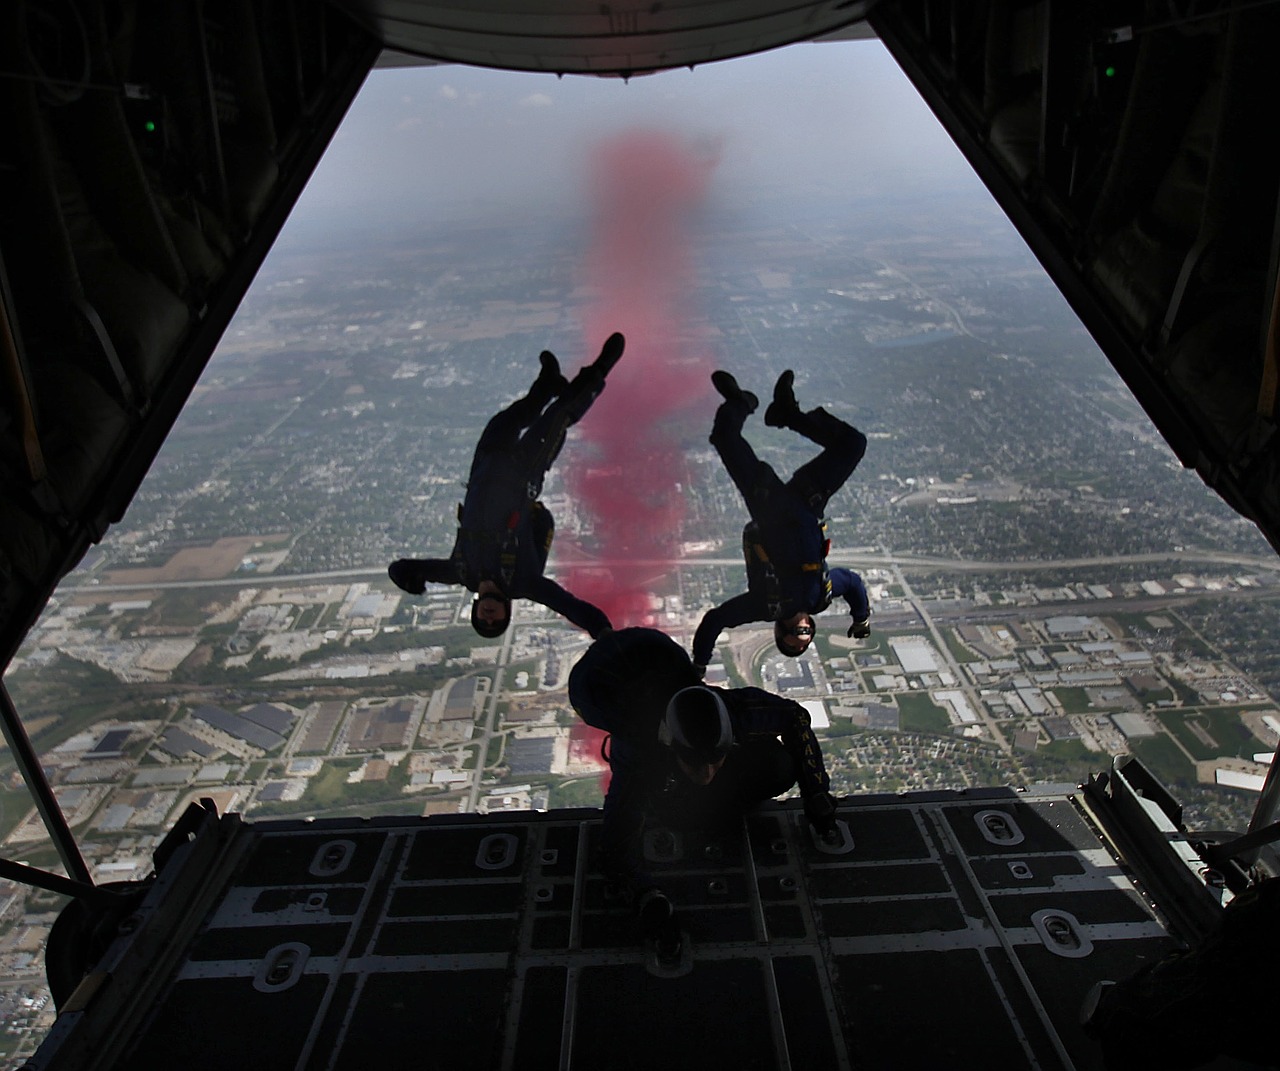 skydiving jump falling free photo